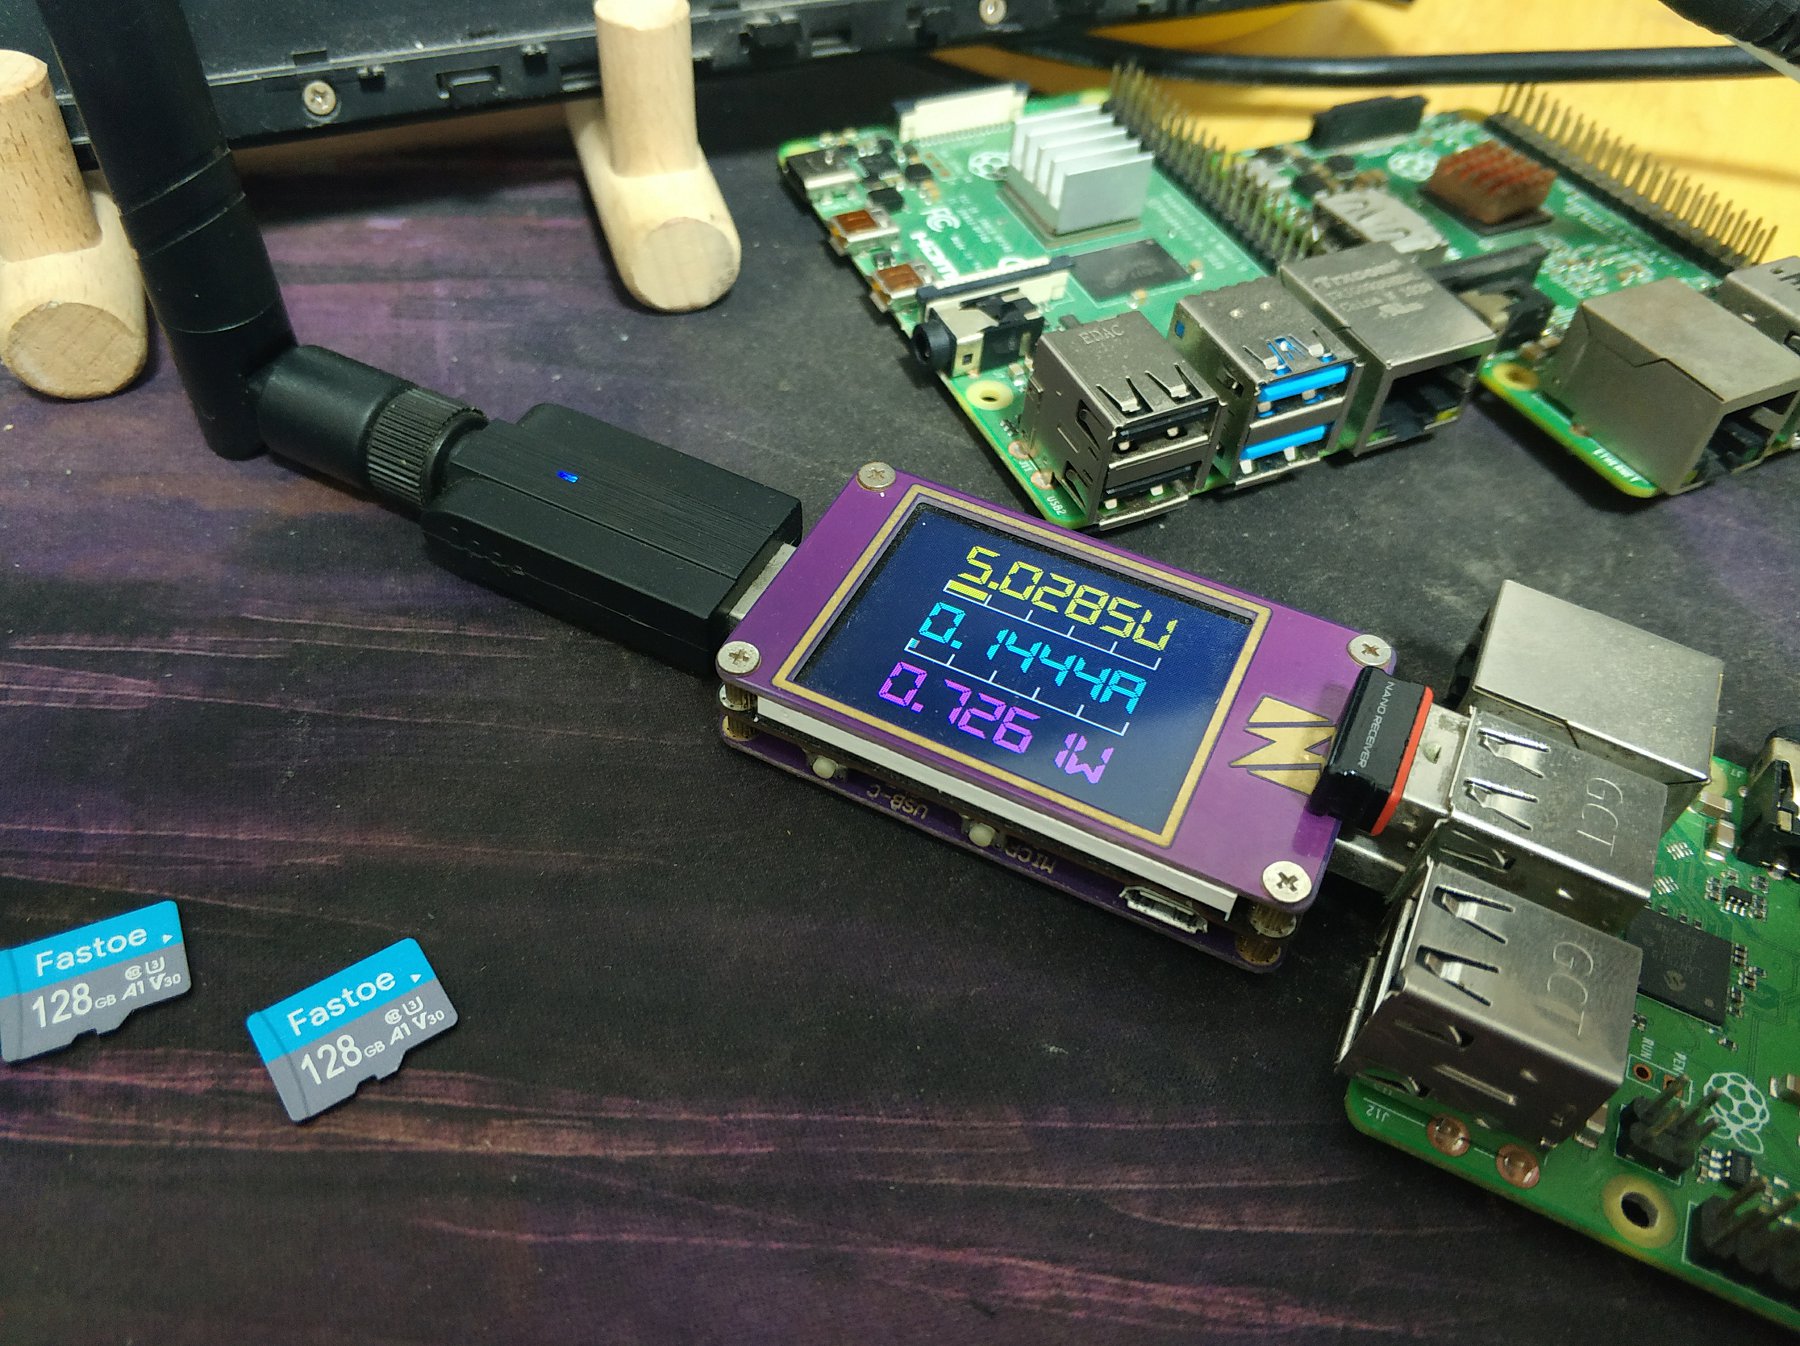 How to setup a RTL881cu USB WiFi adapter with the Raspberry Pi 4